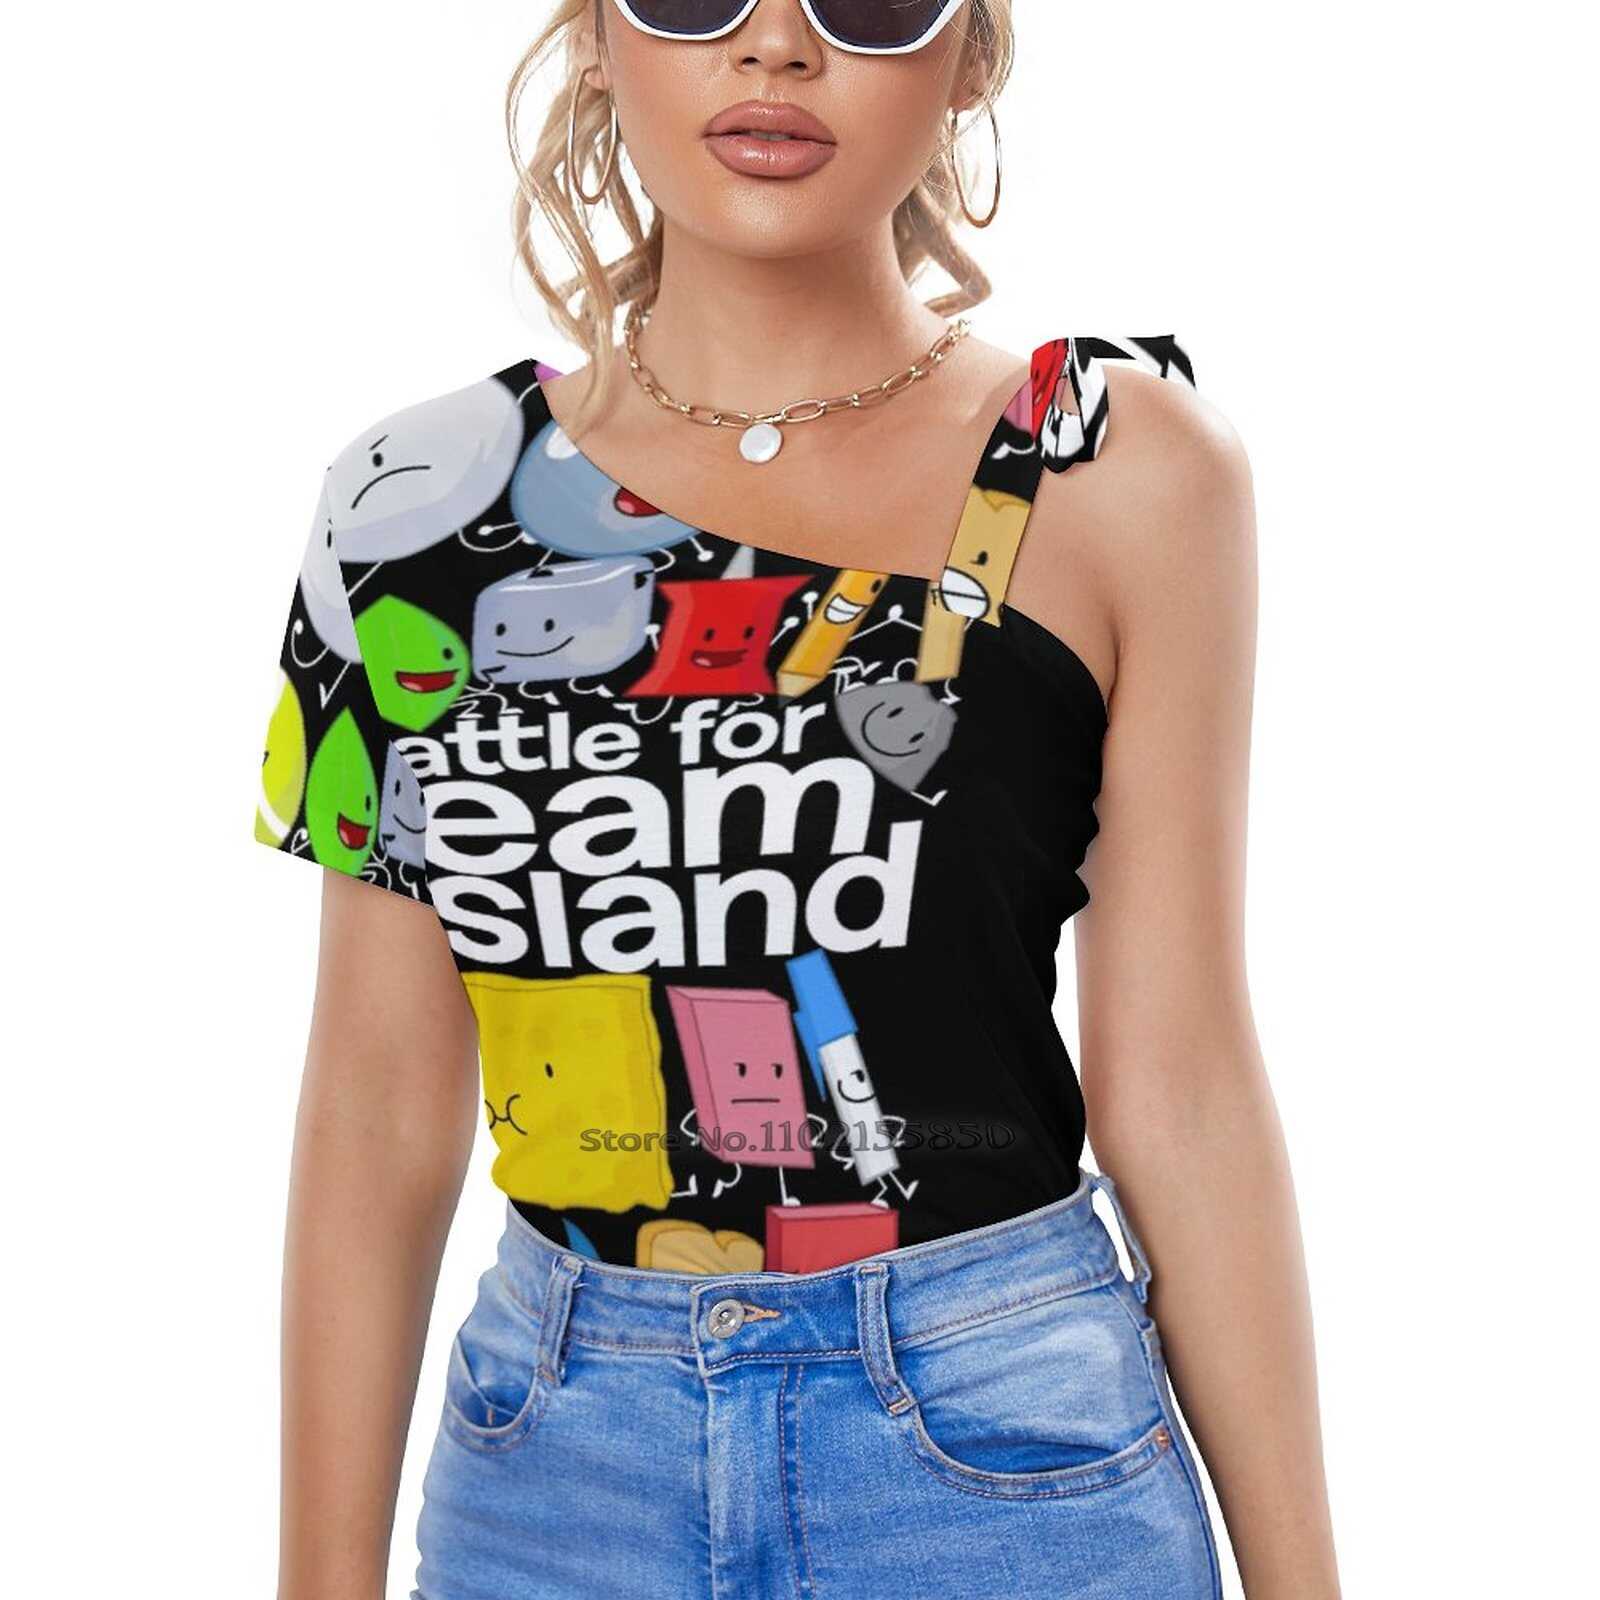 Bfdi Poster Black Women S T Shirt Casual Short Sleeved Tops V Neck Zipper Tee Ladies 4 - BFDI Plush